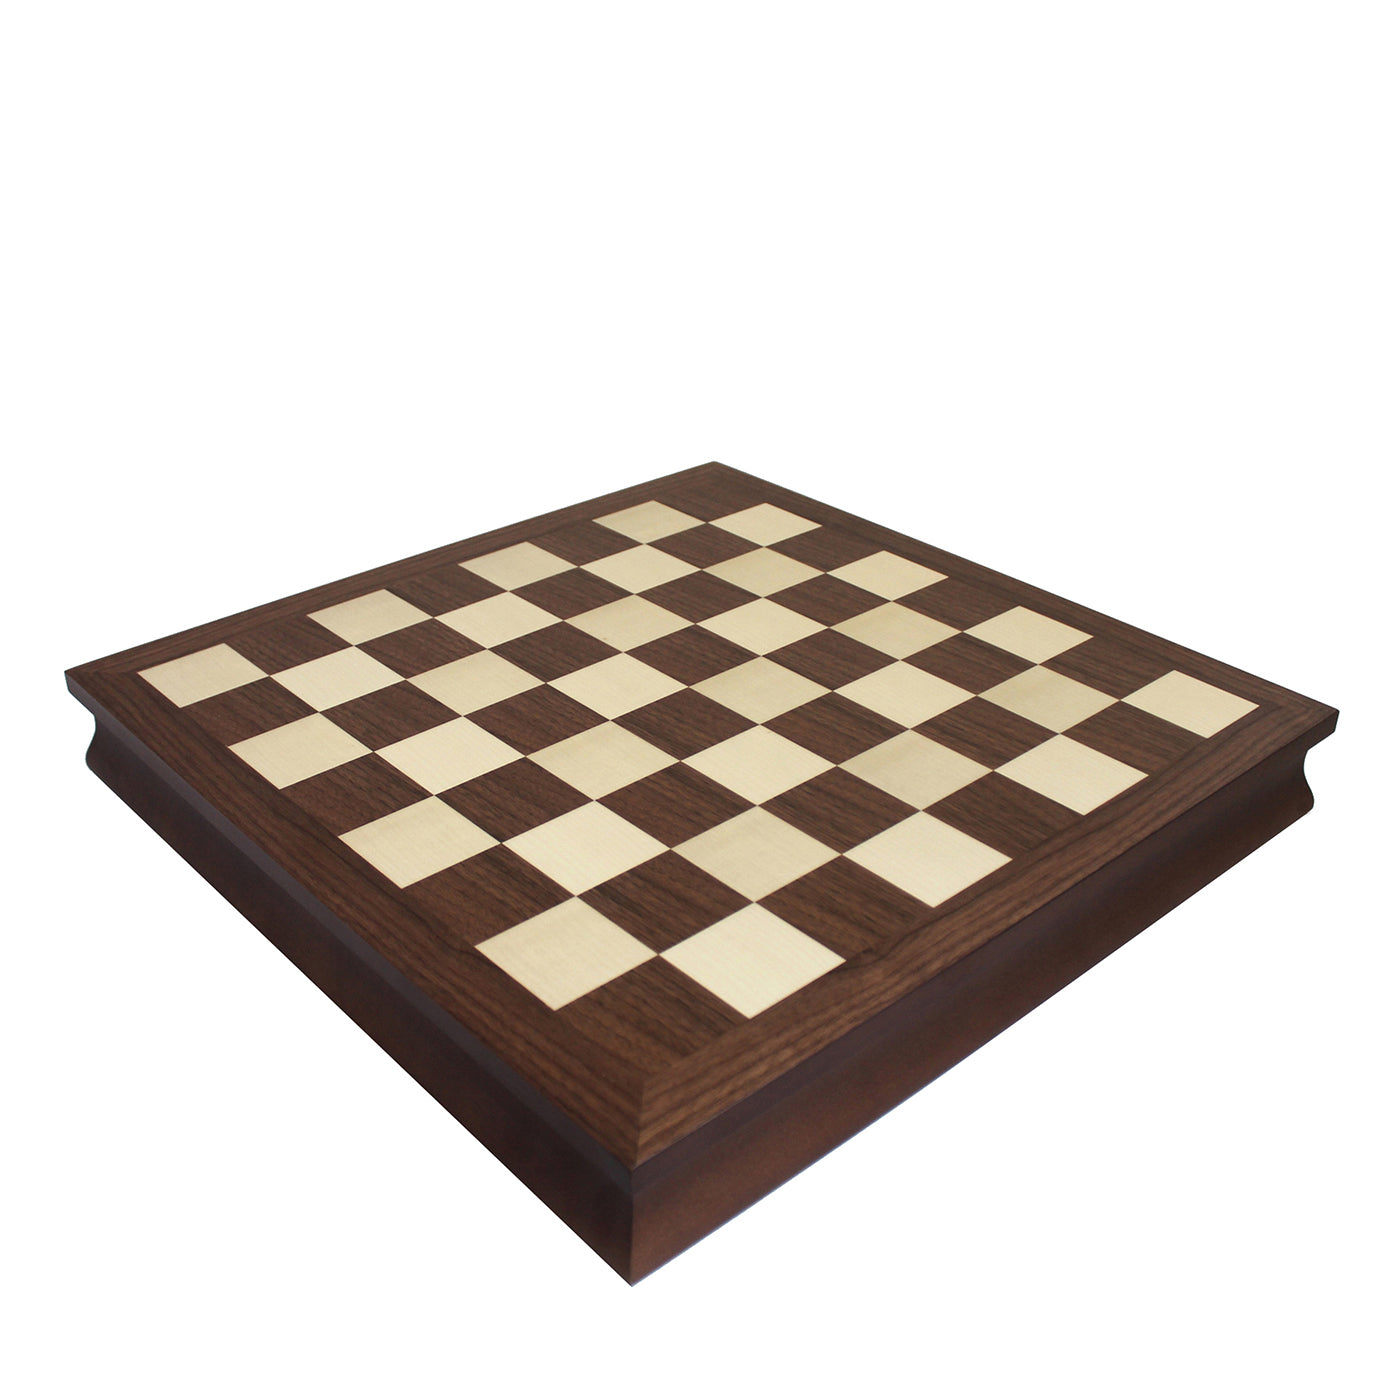 Juego de ajedrez tradicional - Vista alternativa 1